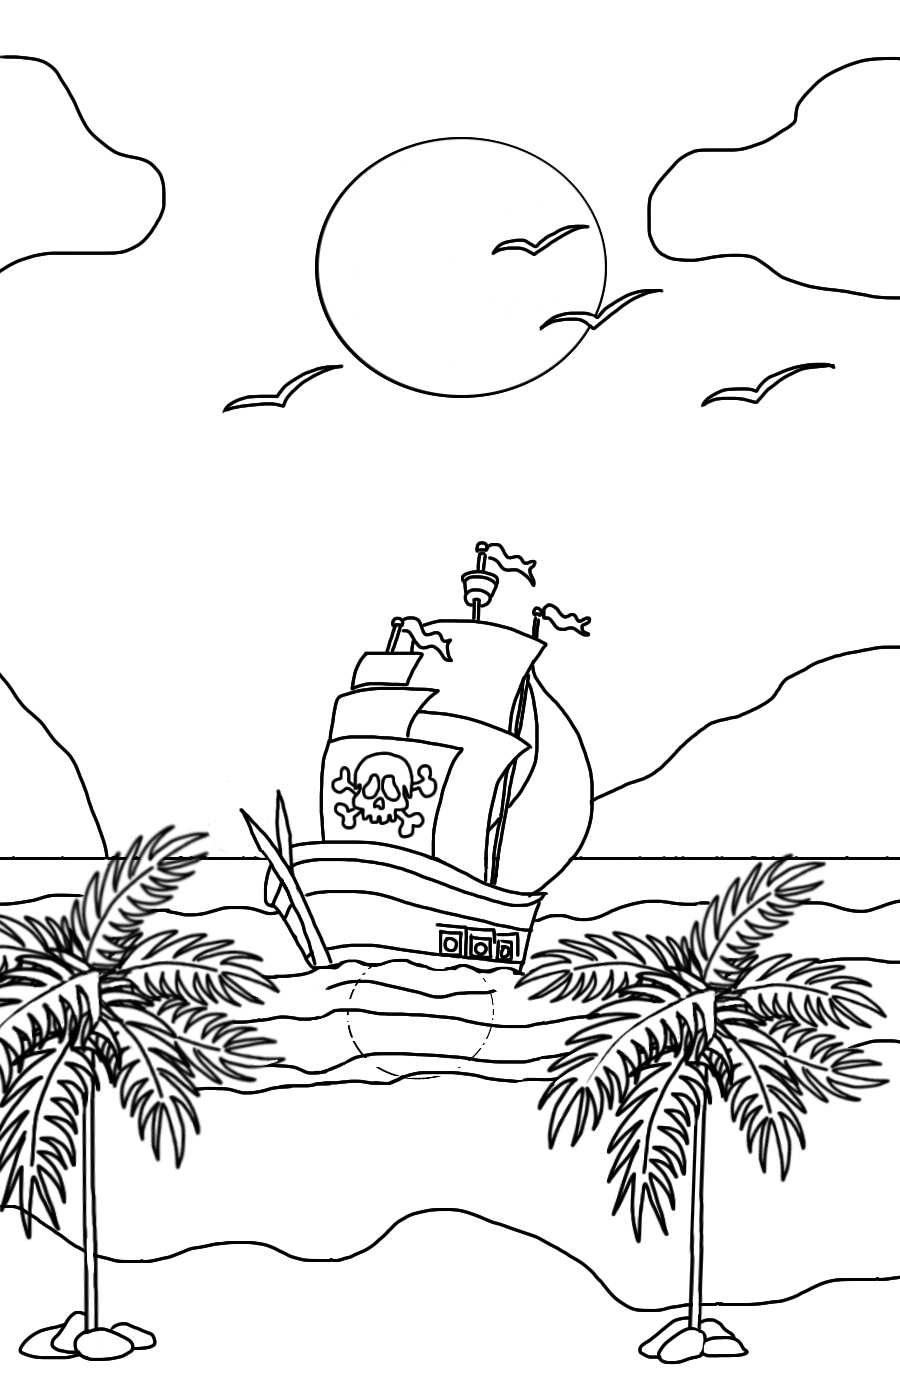 Pirate Ship at Sea Coloring Page